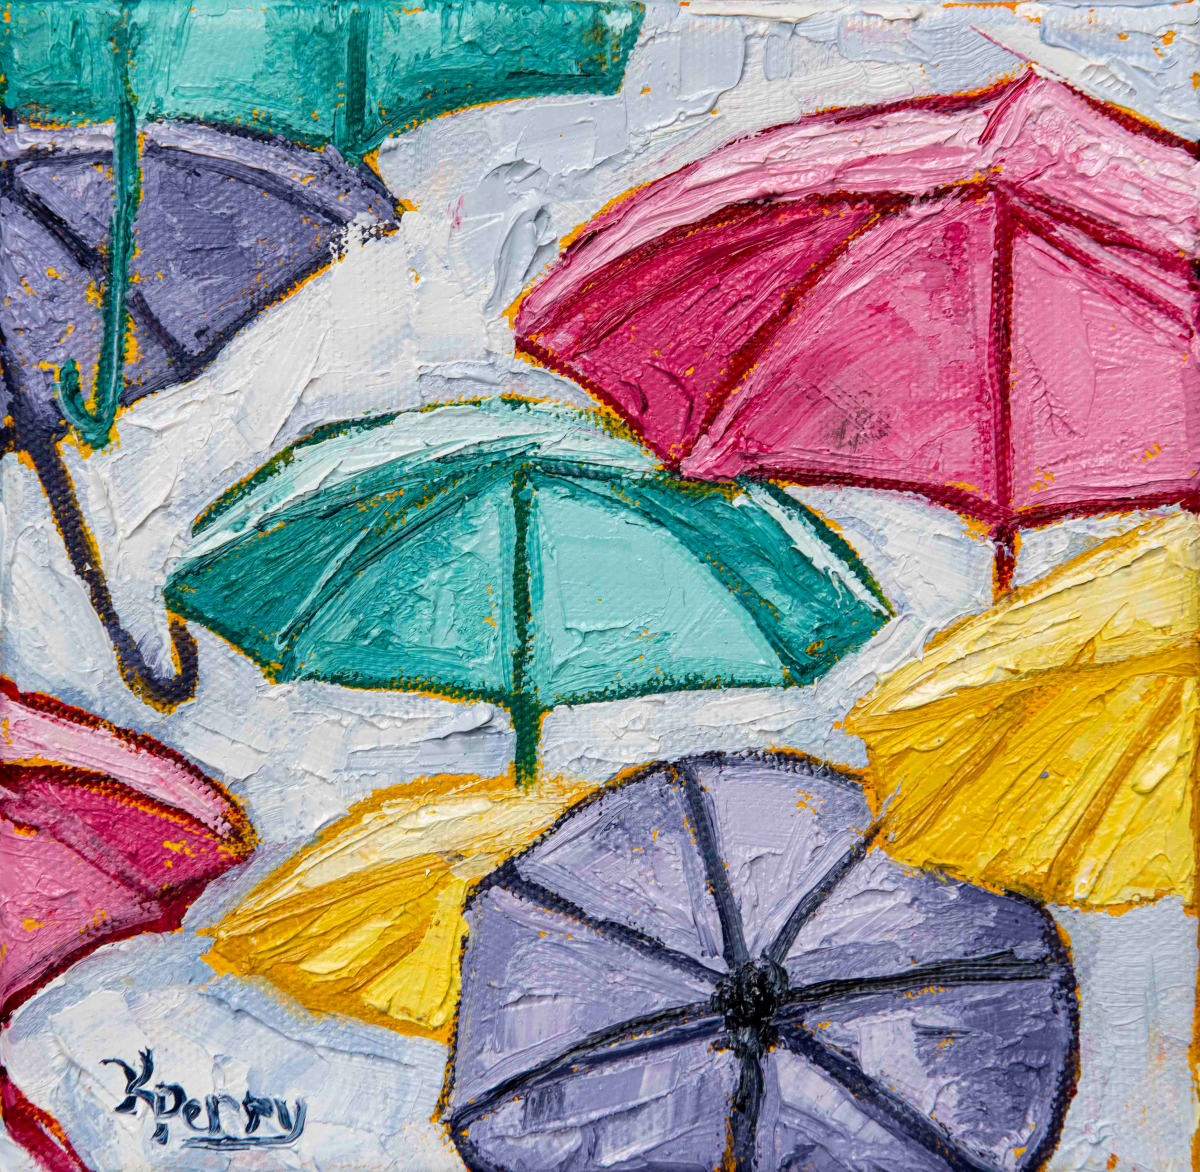 The Small Umbrella by Kim Perry 